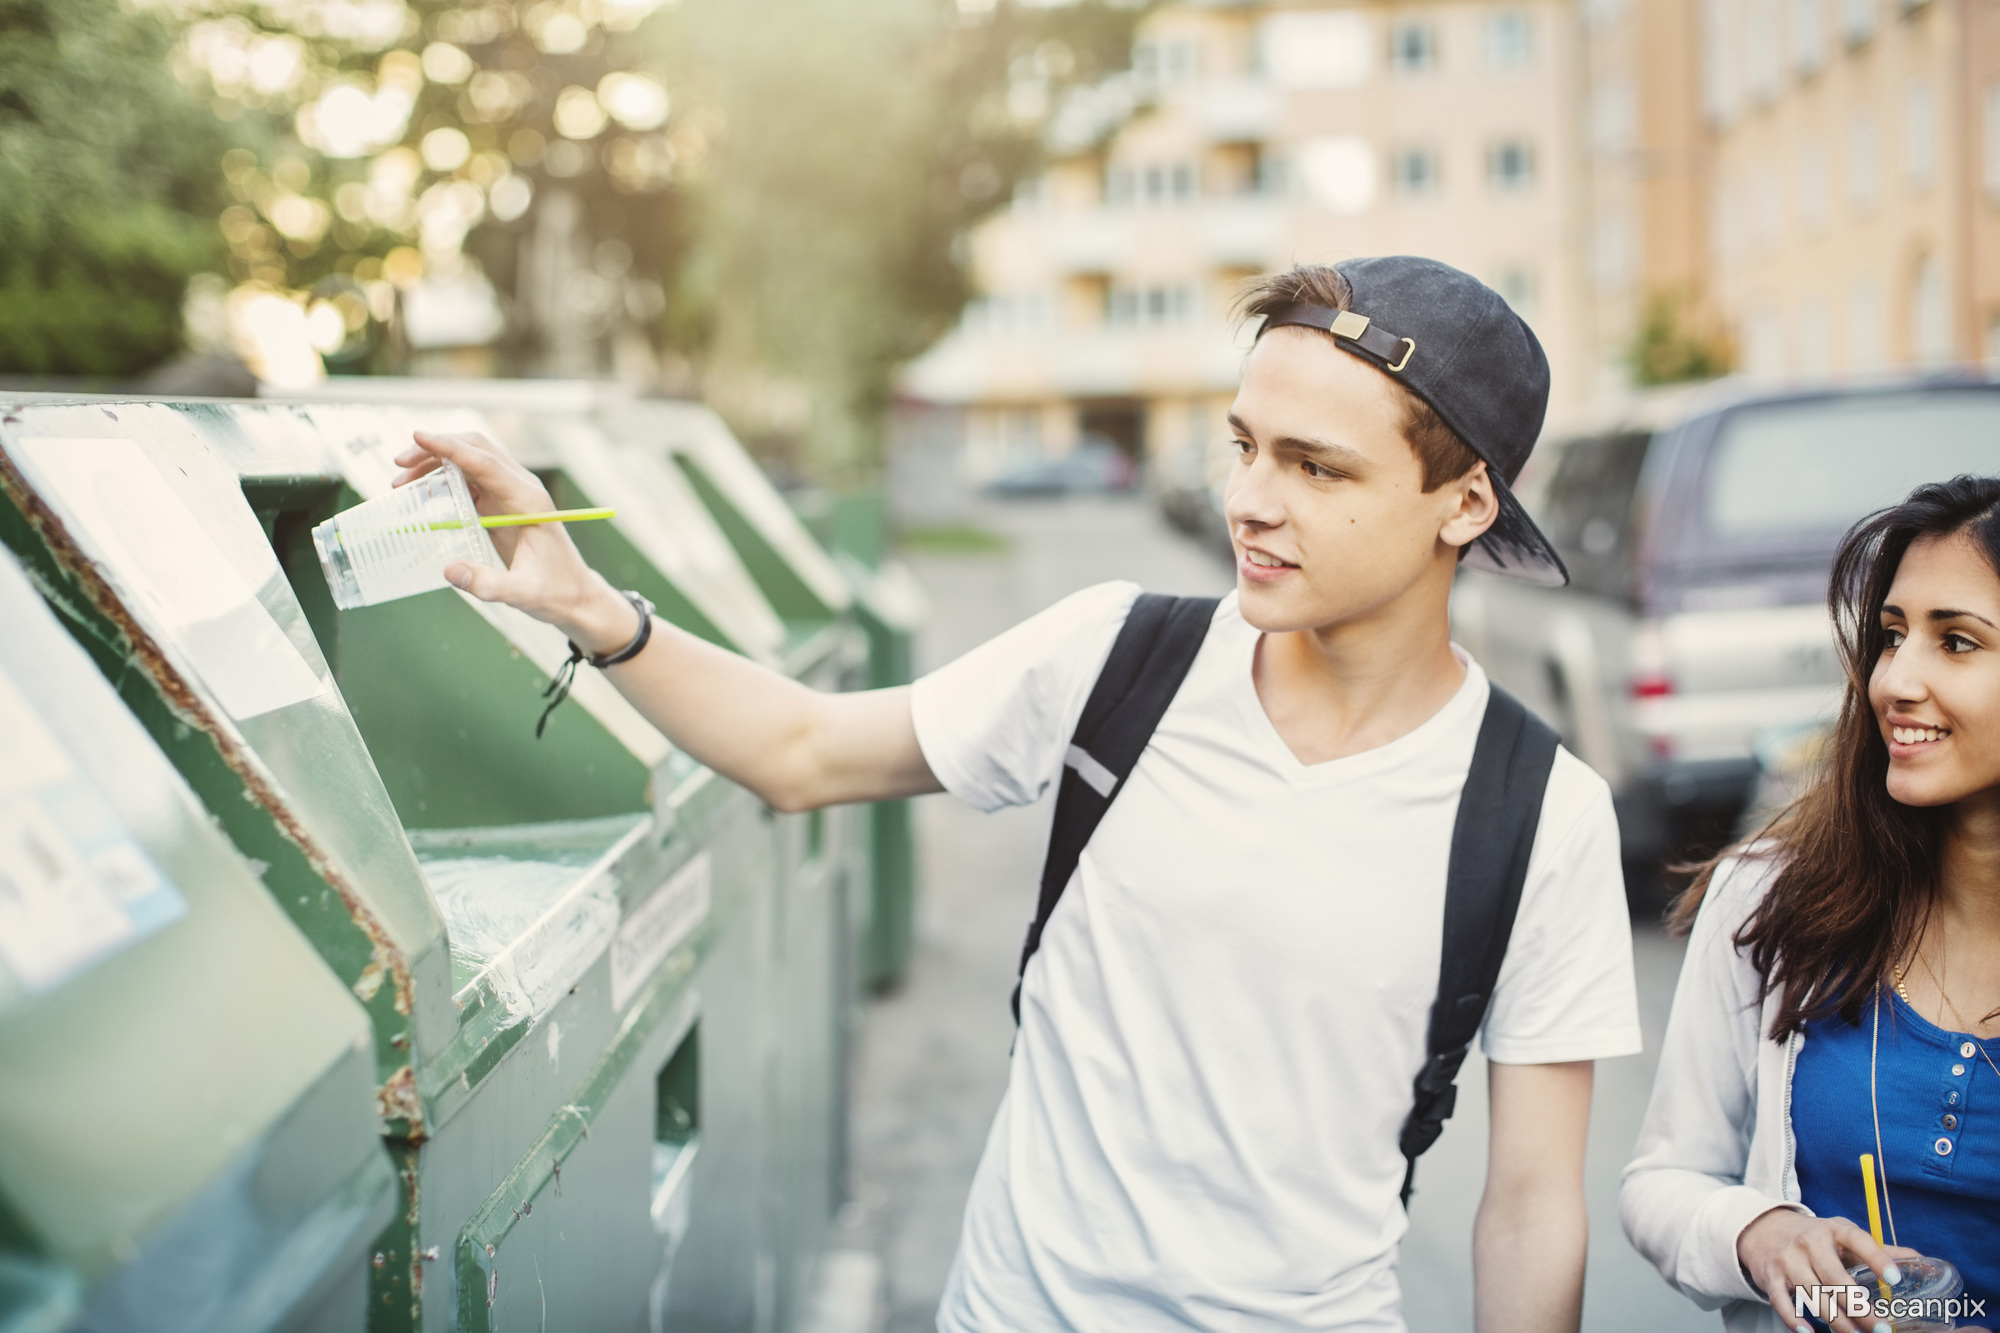 Gutt med kaps kaster plastkopp i søpla. Foto.